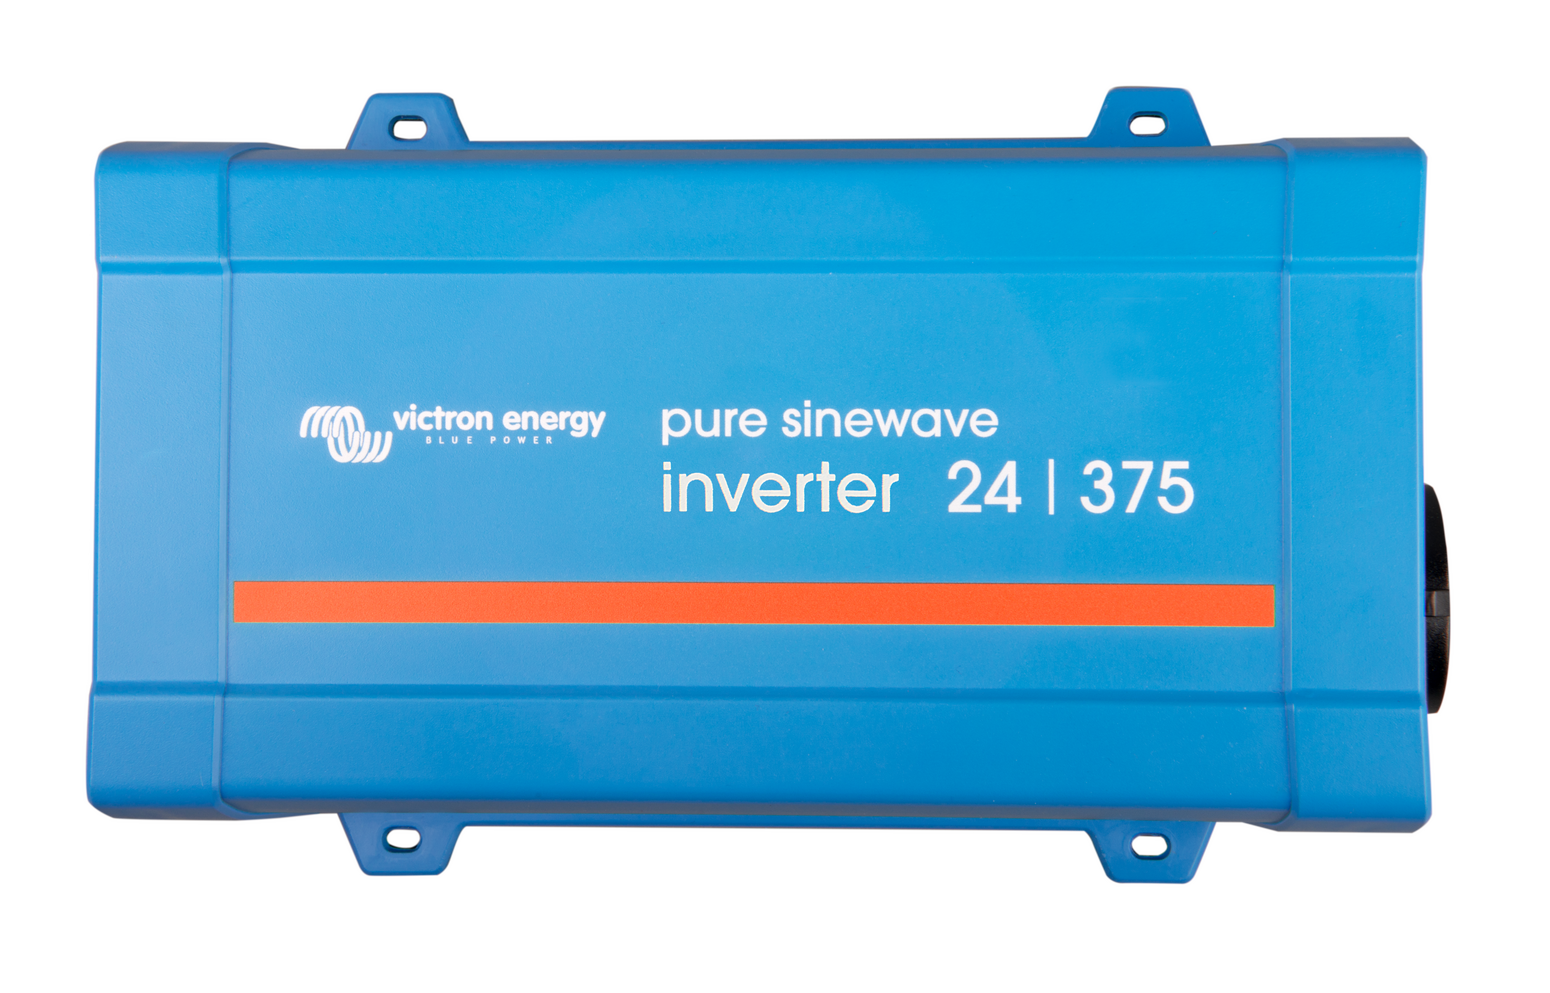 Phoenix Inverter 24/375 230V VE.Direct IEC